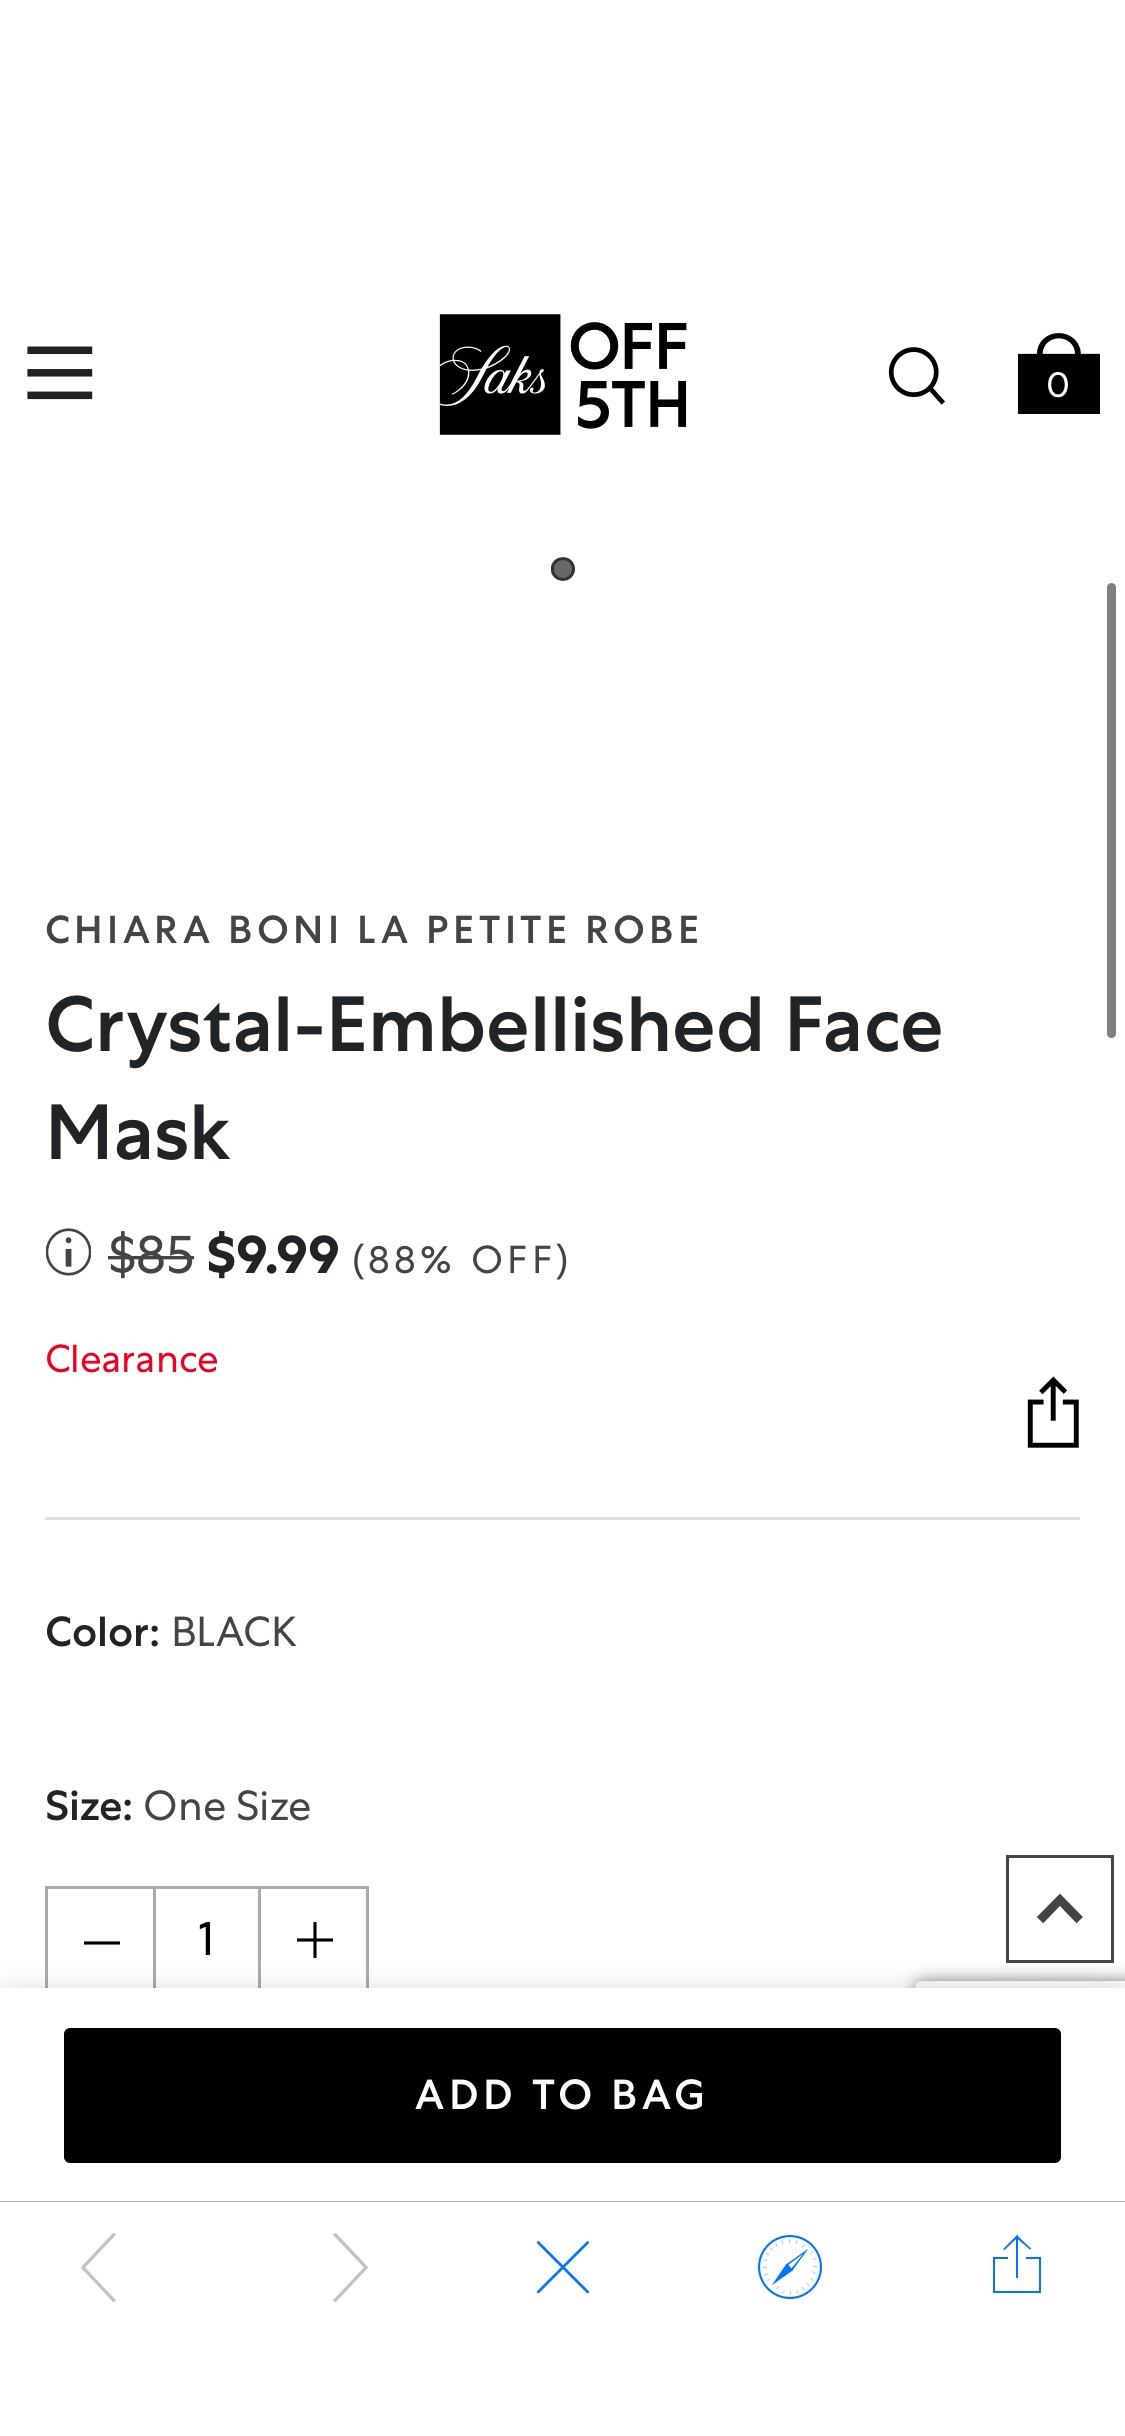 Chiara Boni La Petite Robe Crystal-Embellished Face Mask on SALE | Saks OFF 5TH